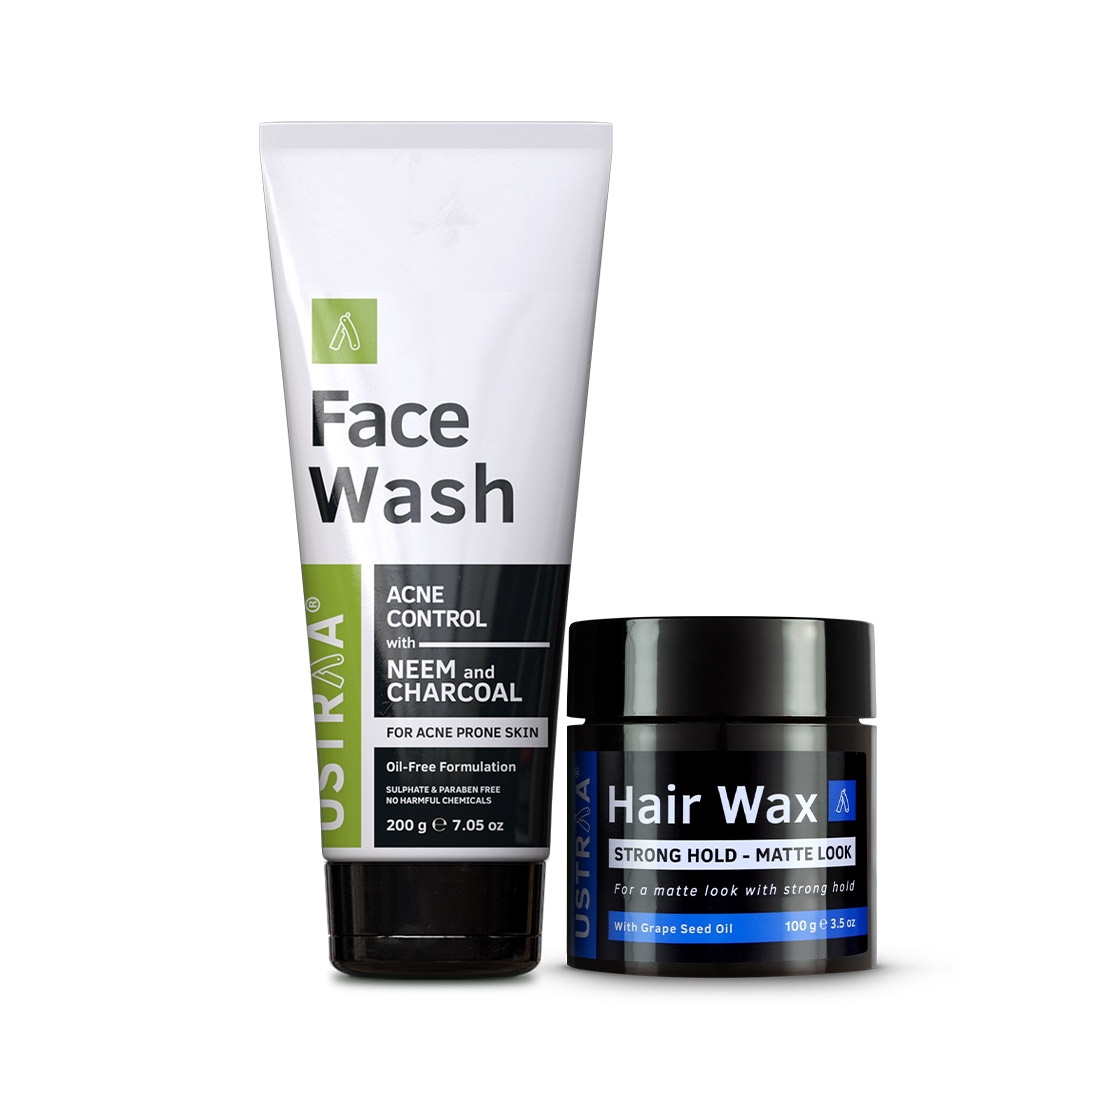 Ustraa Hair Wax - Matte Look 100 g & Face Wash (Neem & Charcoal)200g